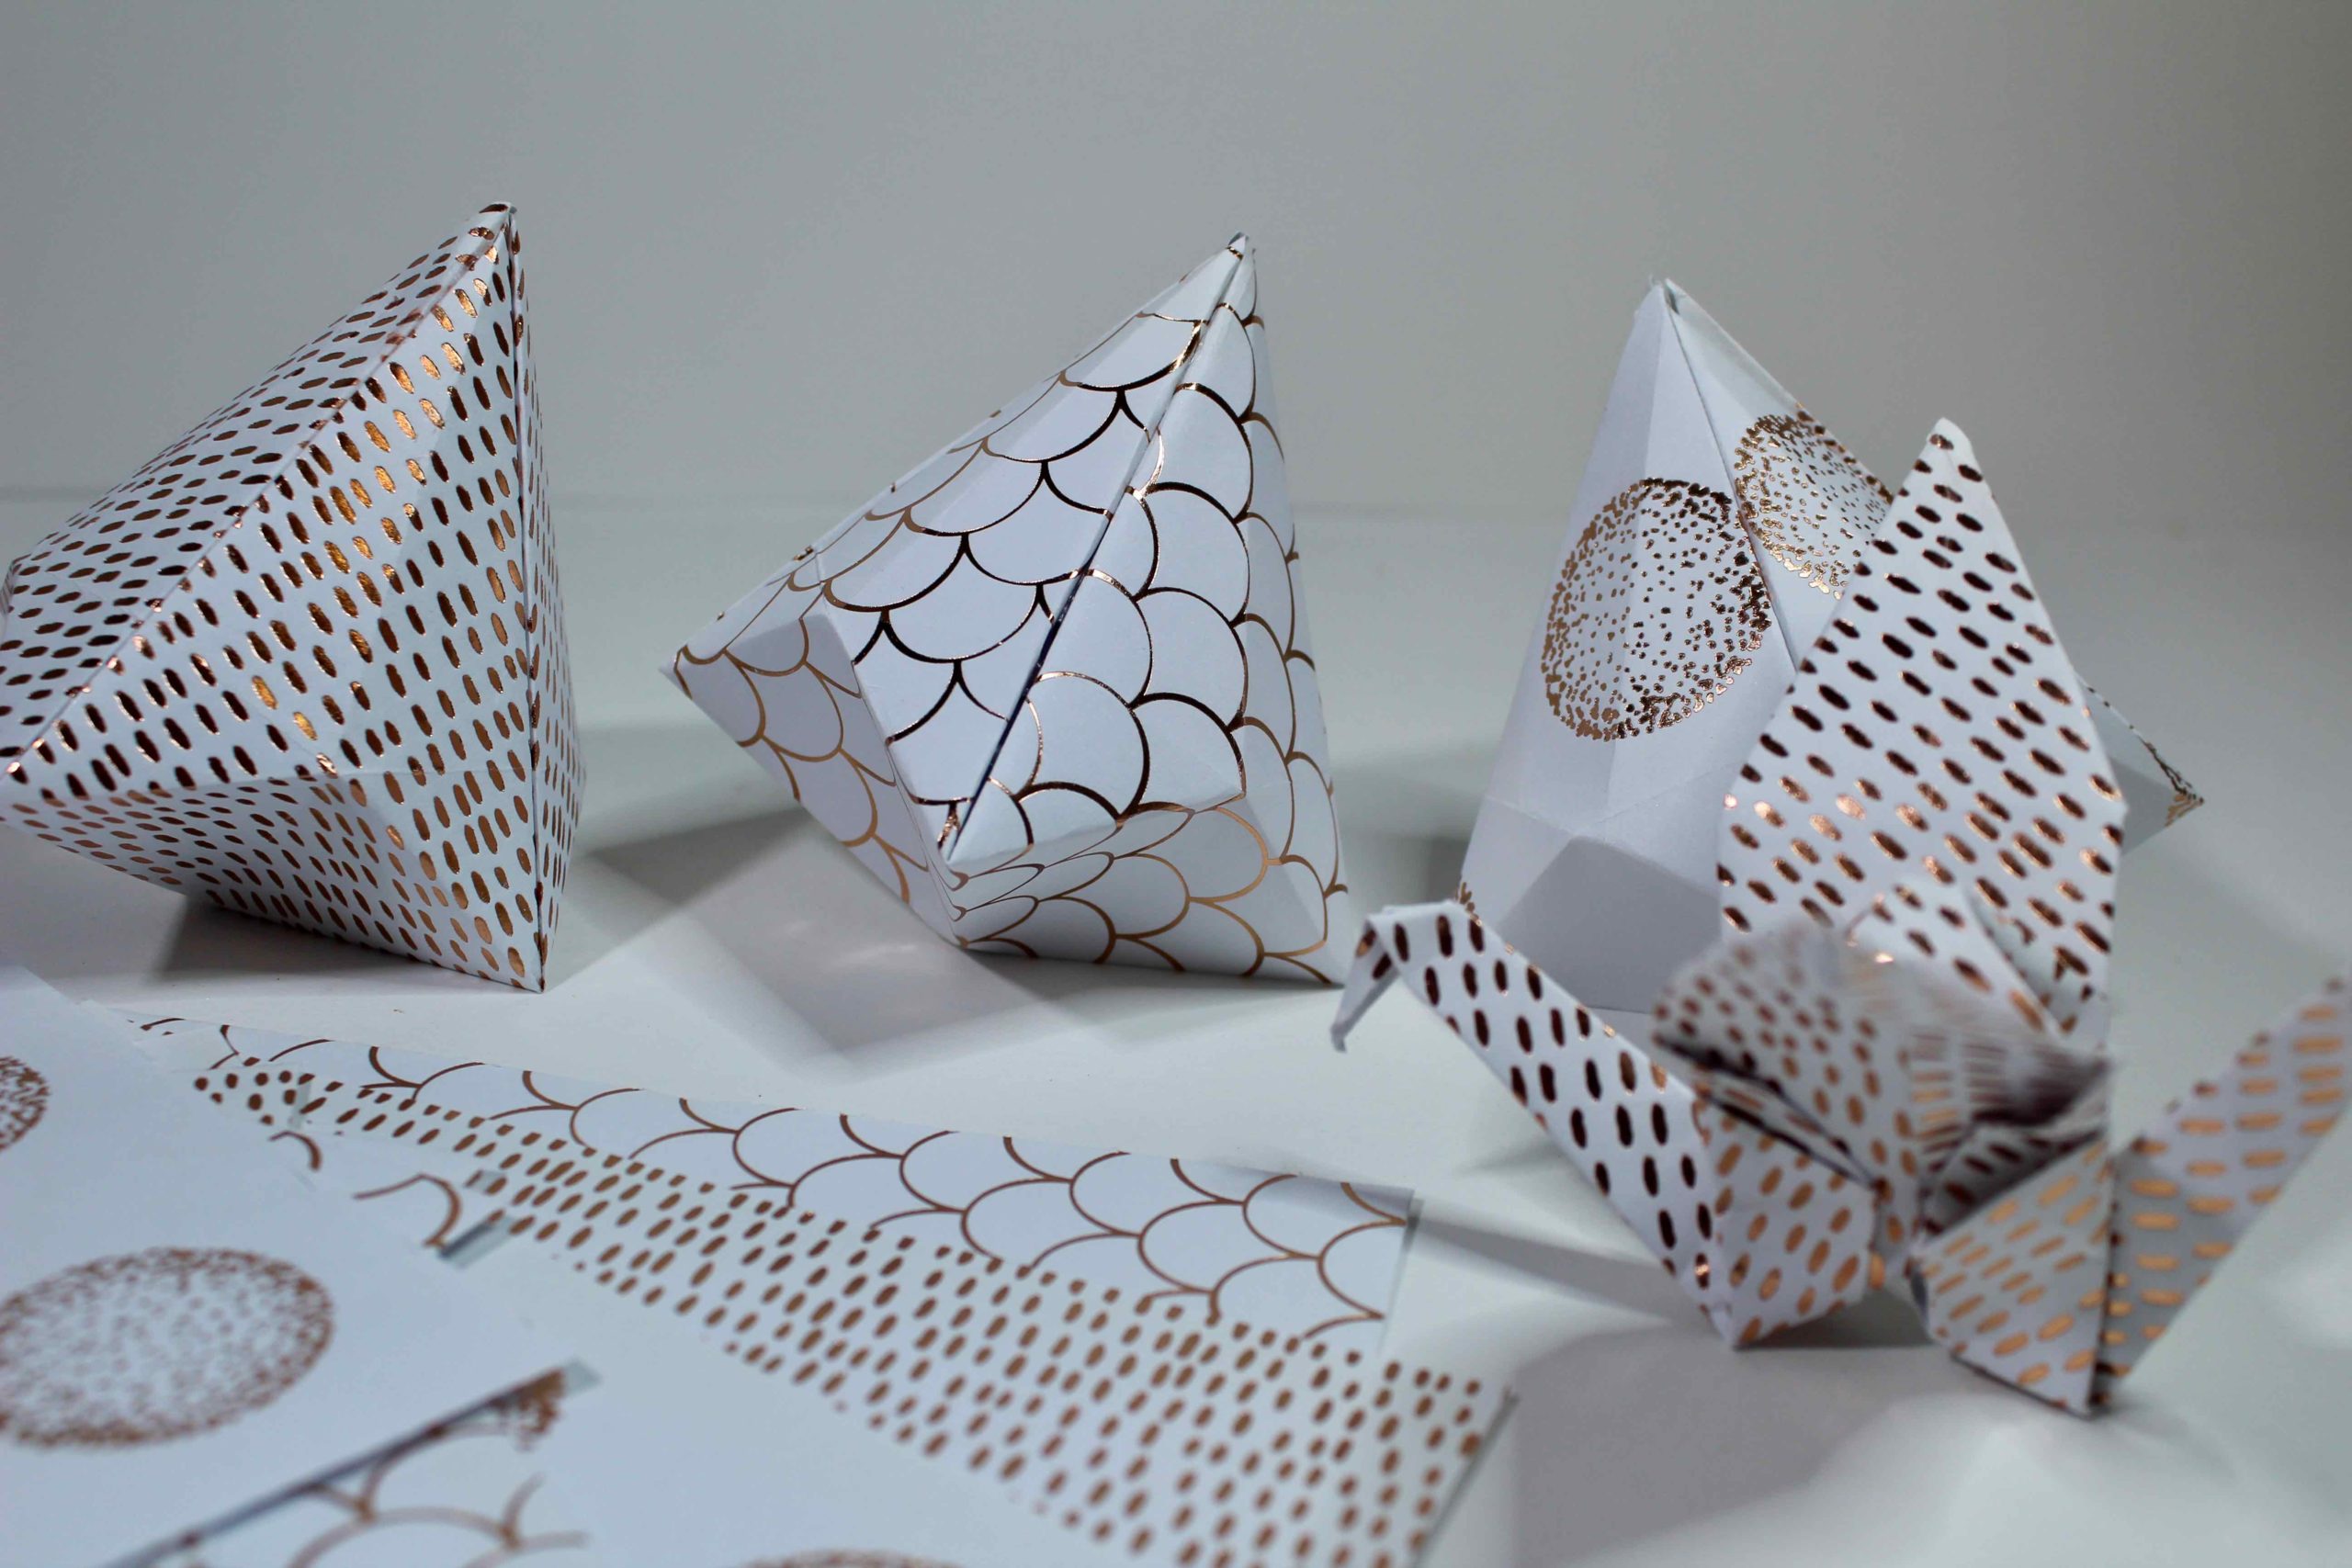 Atelier origami pour ados/adultes